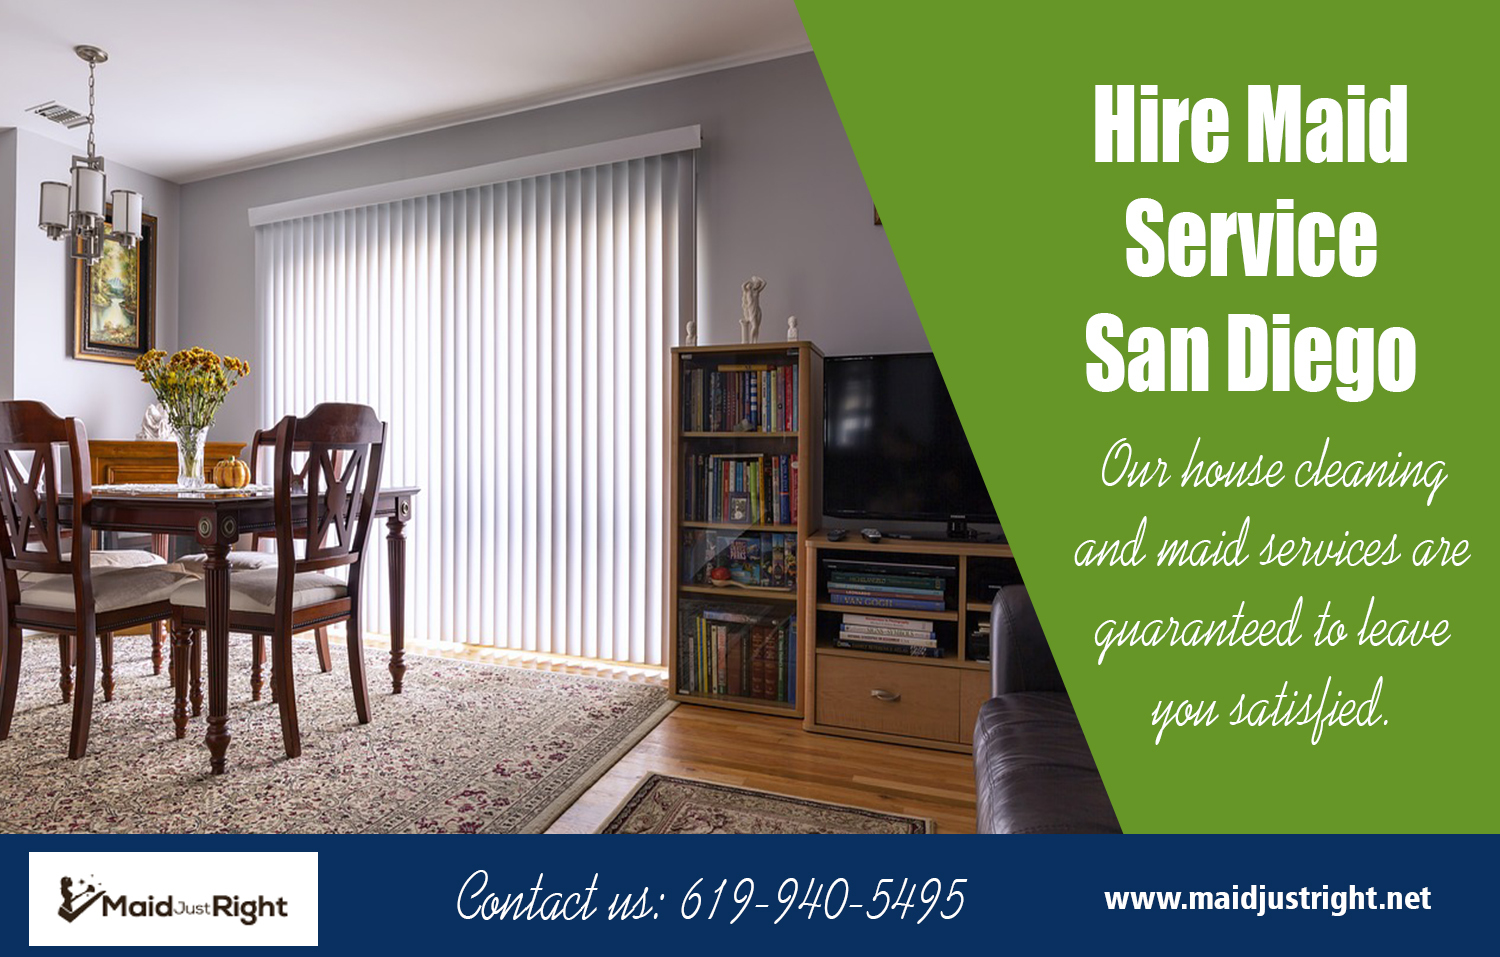 Hire Maid Service San Diego | Call Us - 619-940-5495 | maidjustright.net